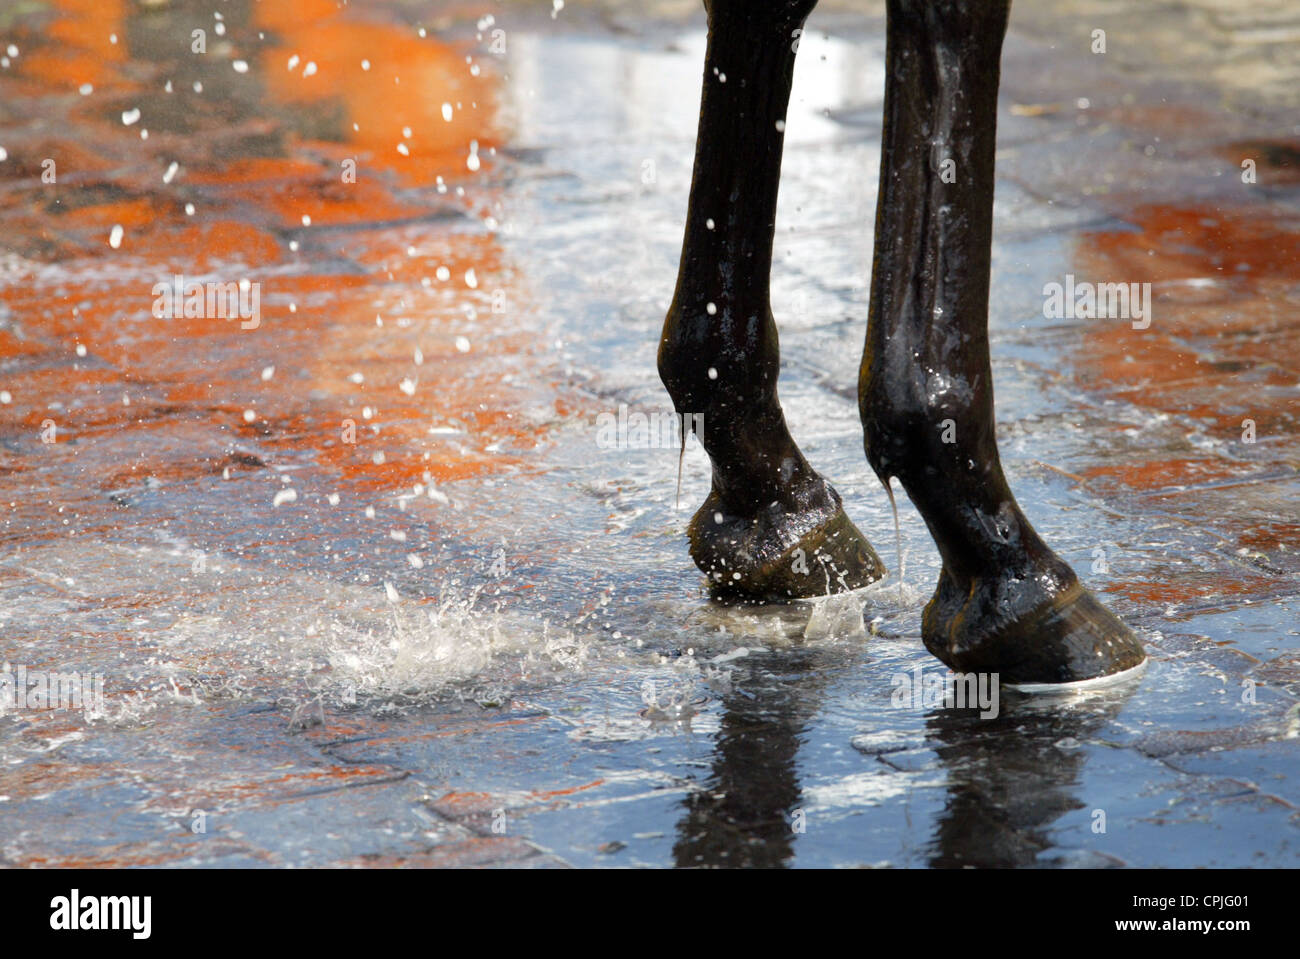 Wet front legs of a horse, Hamburg, Germany Stock Photo